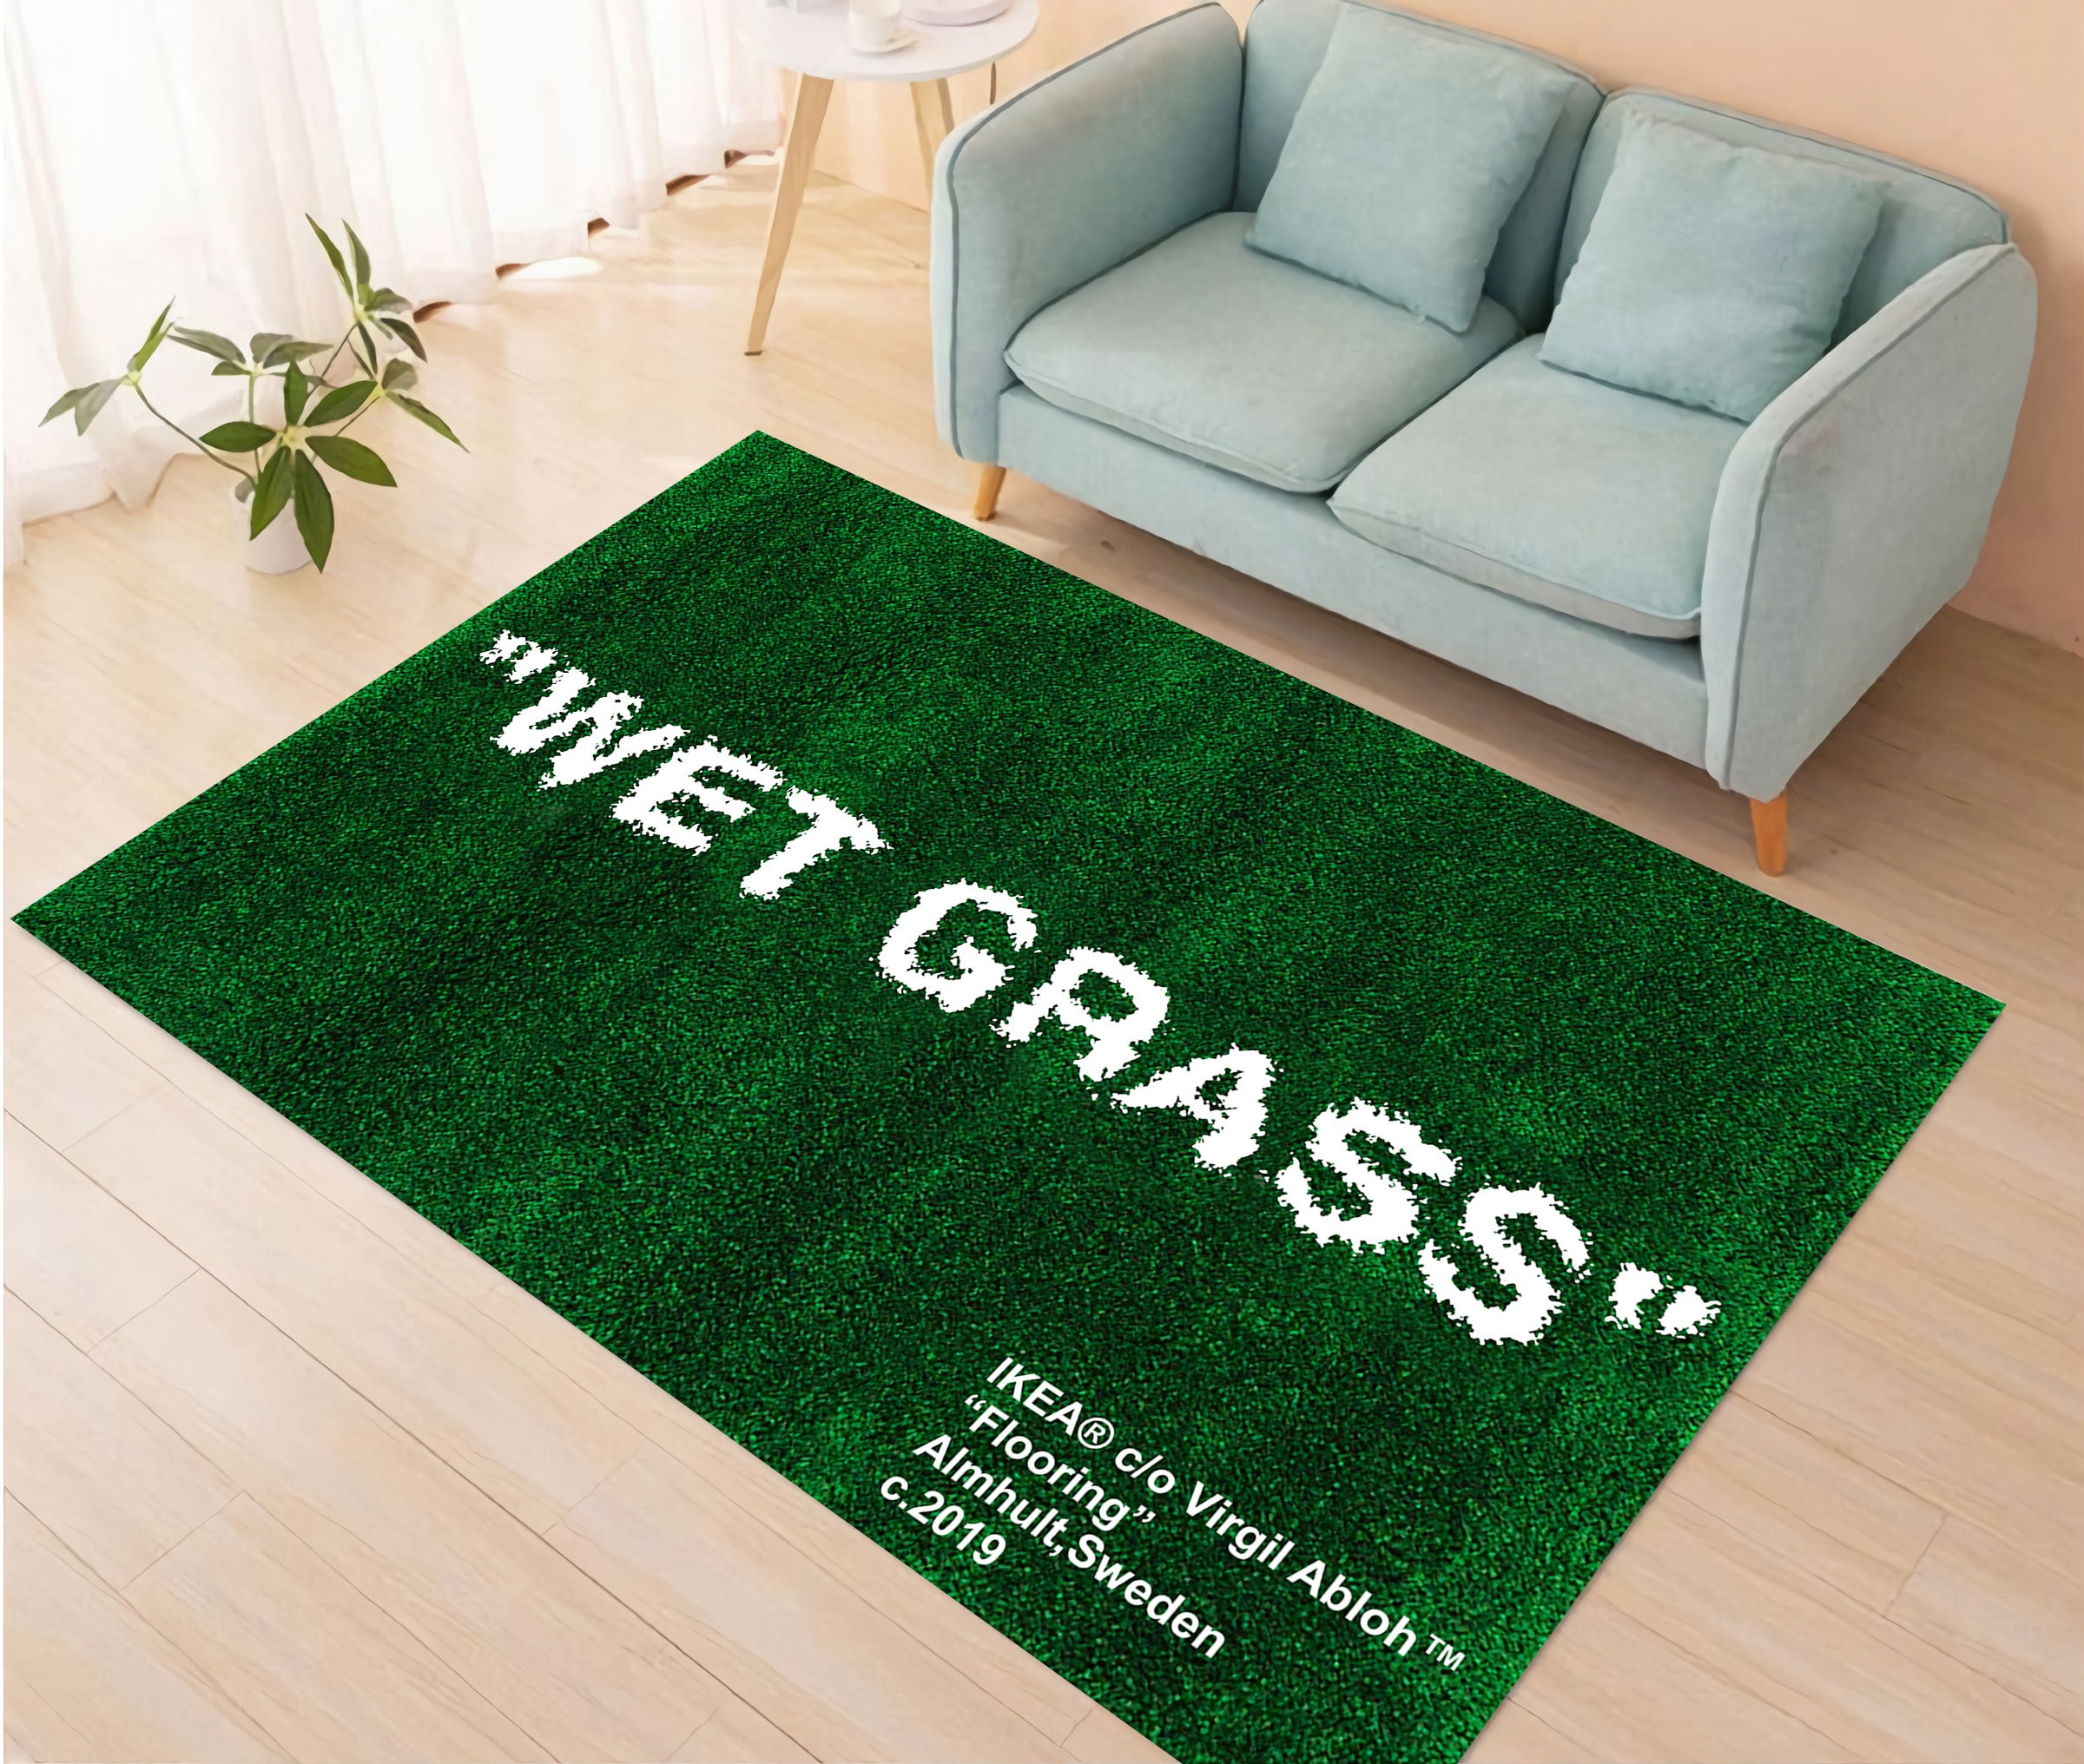 Grass Lookingwet Grass Ruggrass Patternliving Room Rugarea 